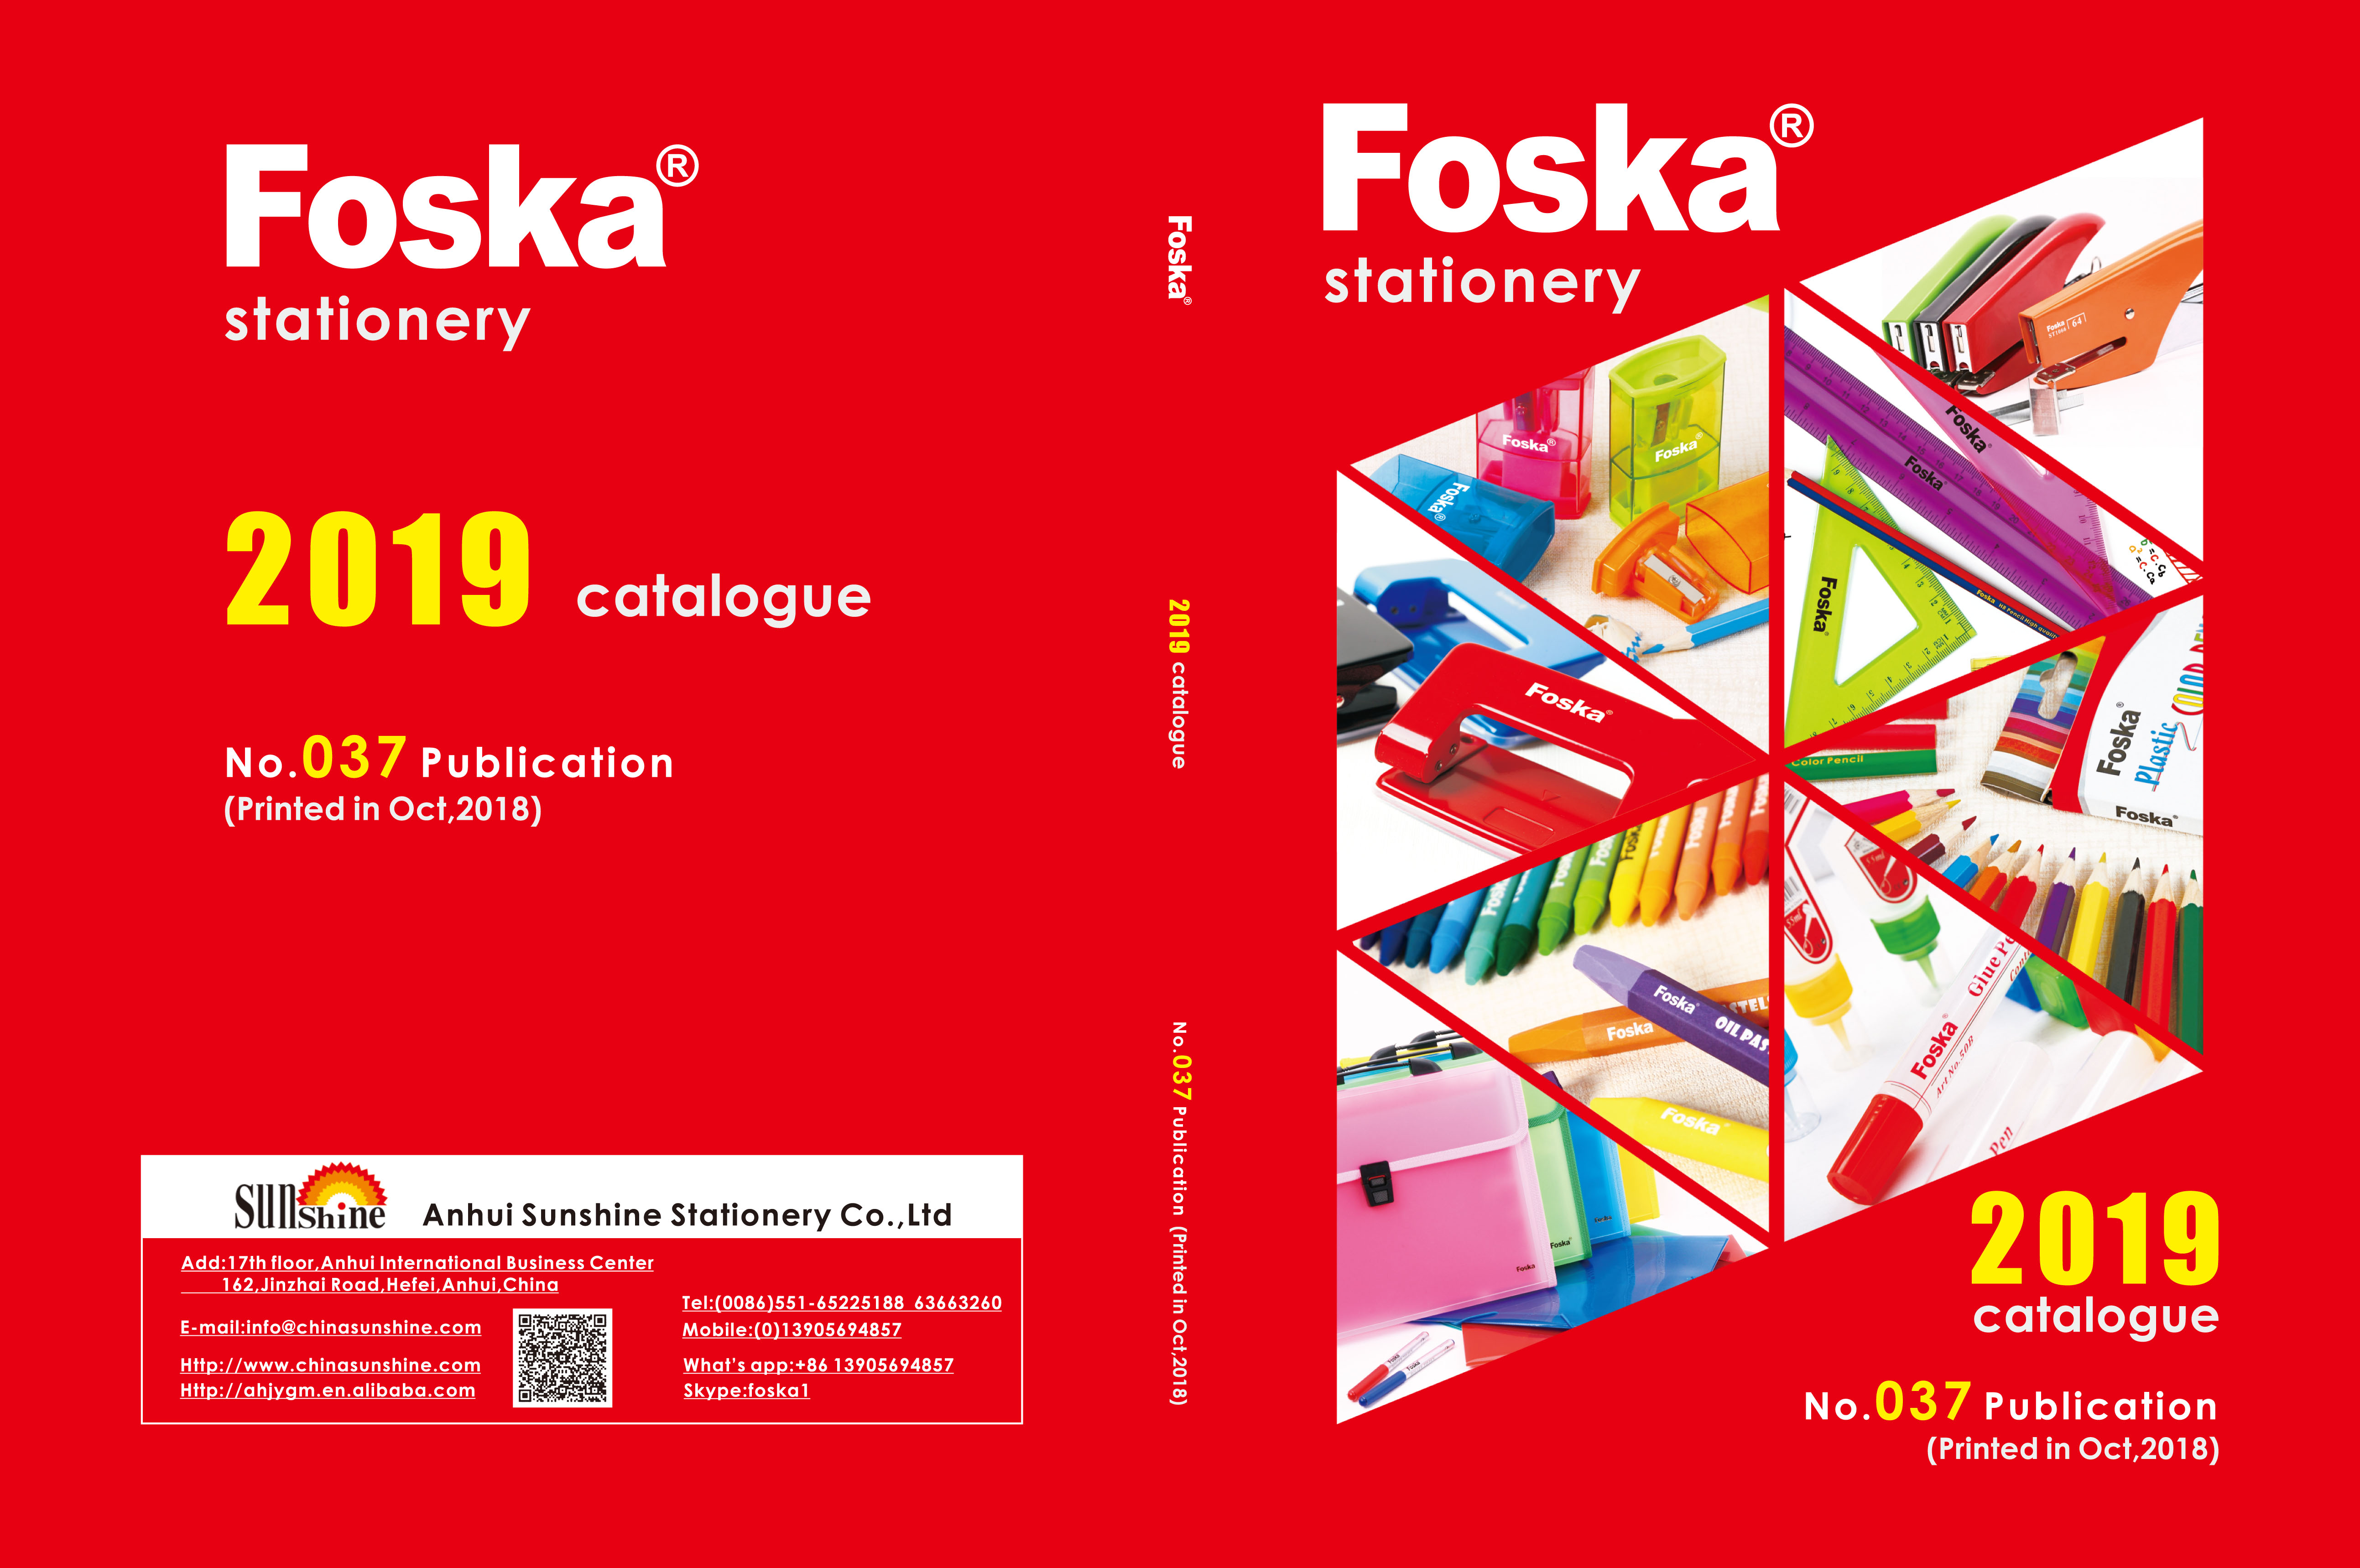 Foska Latest Catalogue for 2019